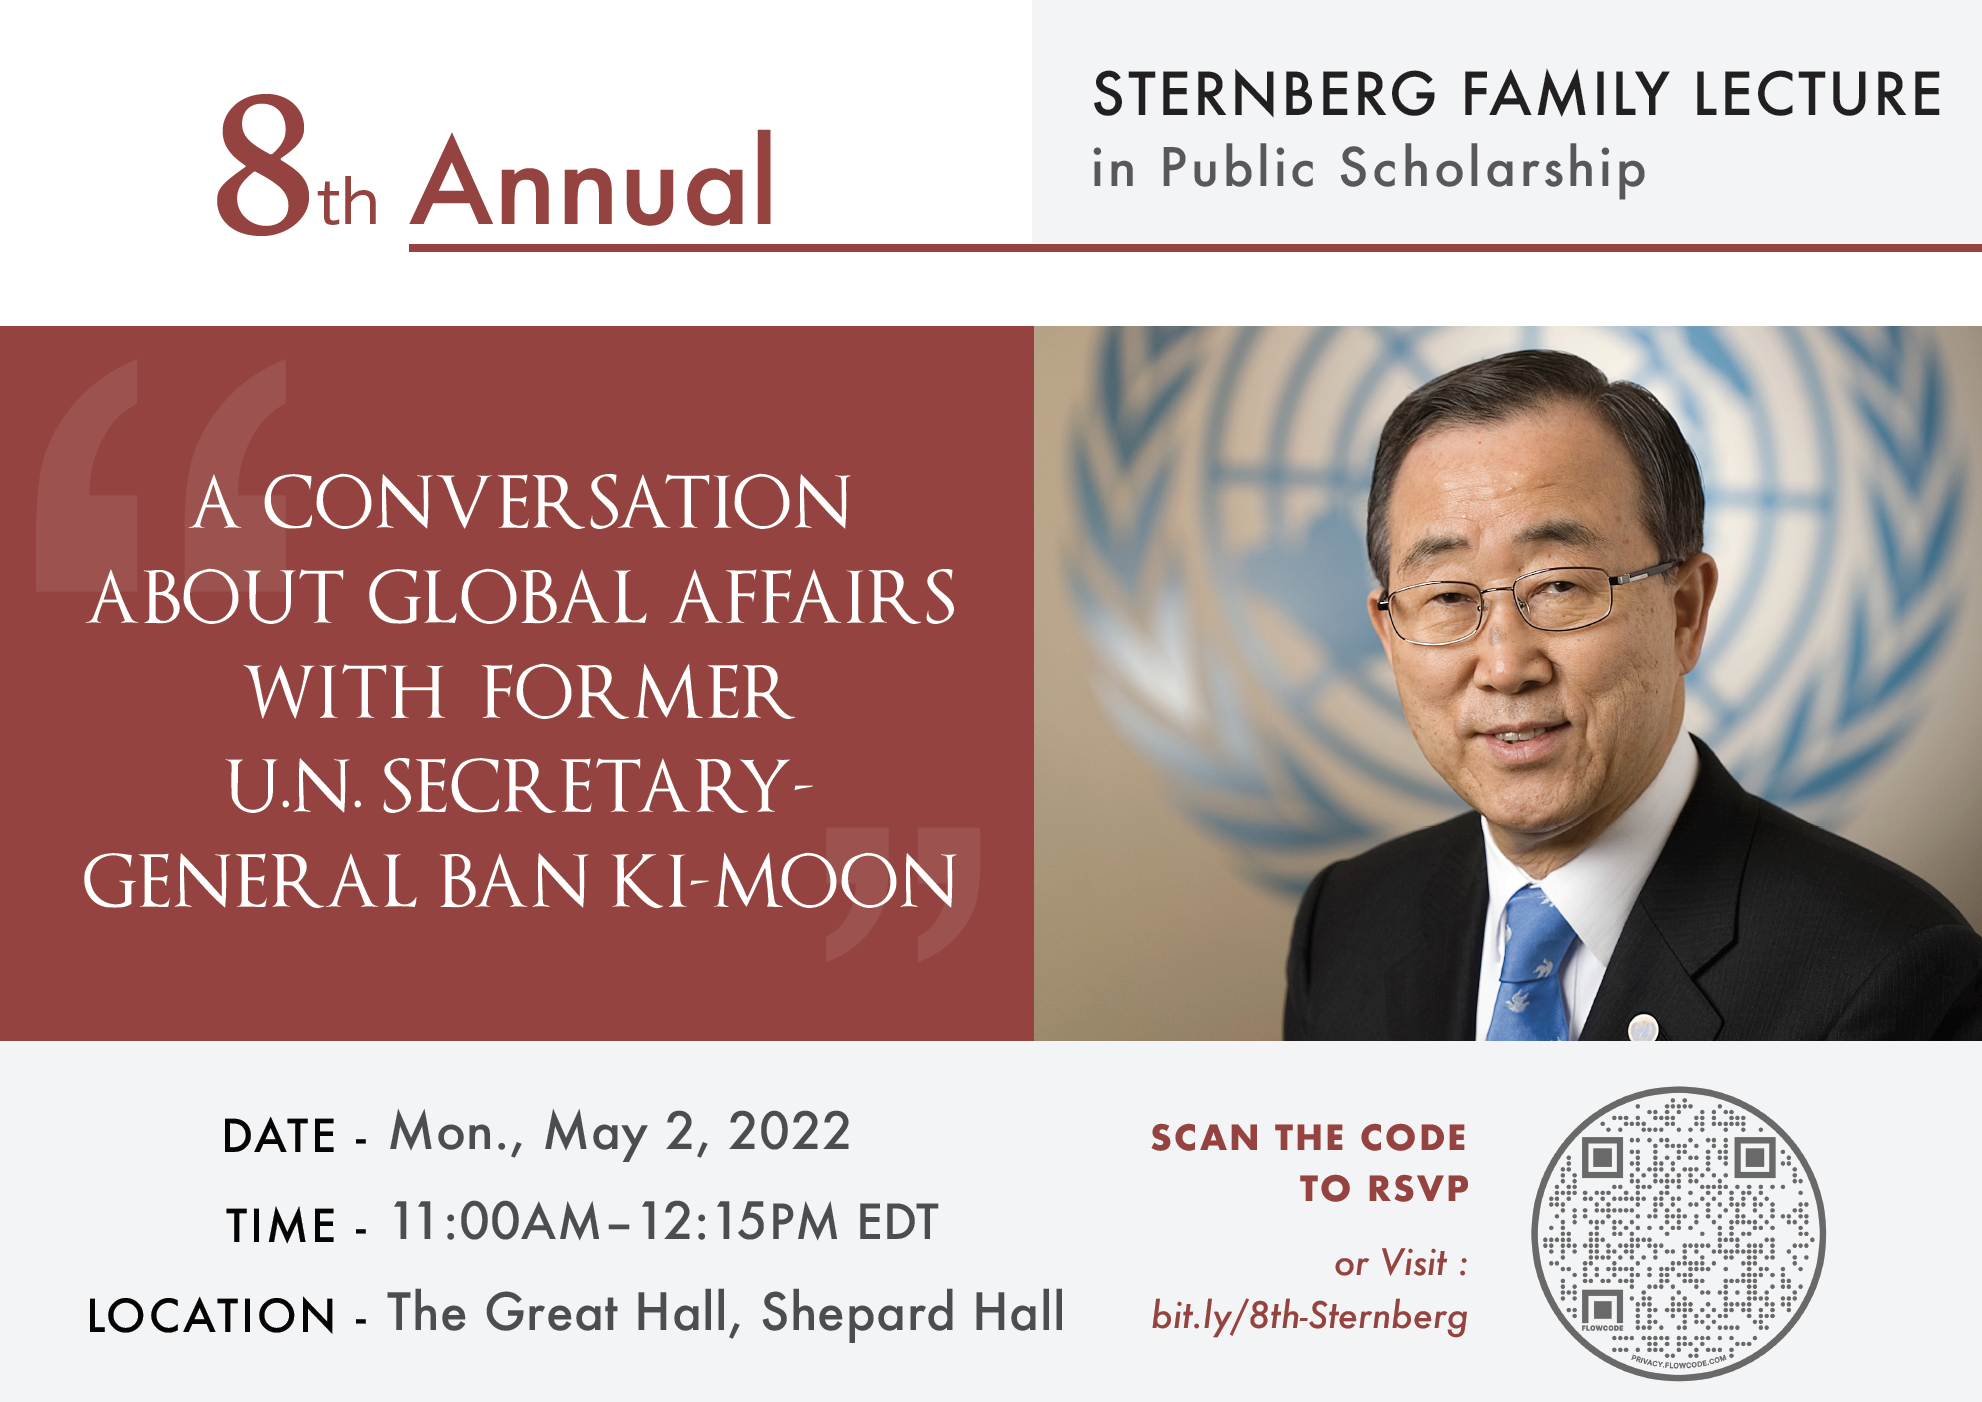 A Conversation About Global Affairs with Former U.N. Secretary-General Ban Ki-moon